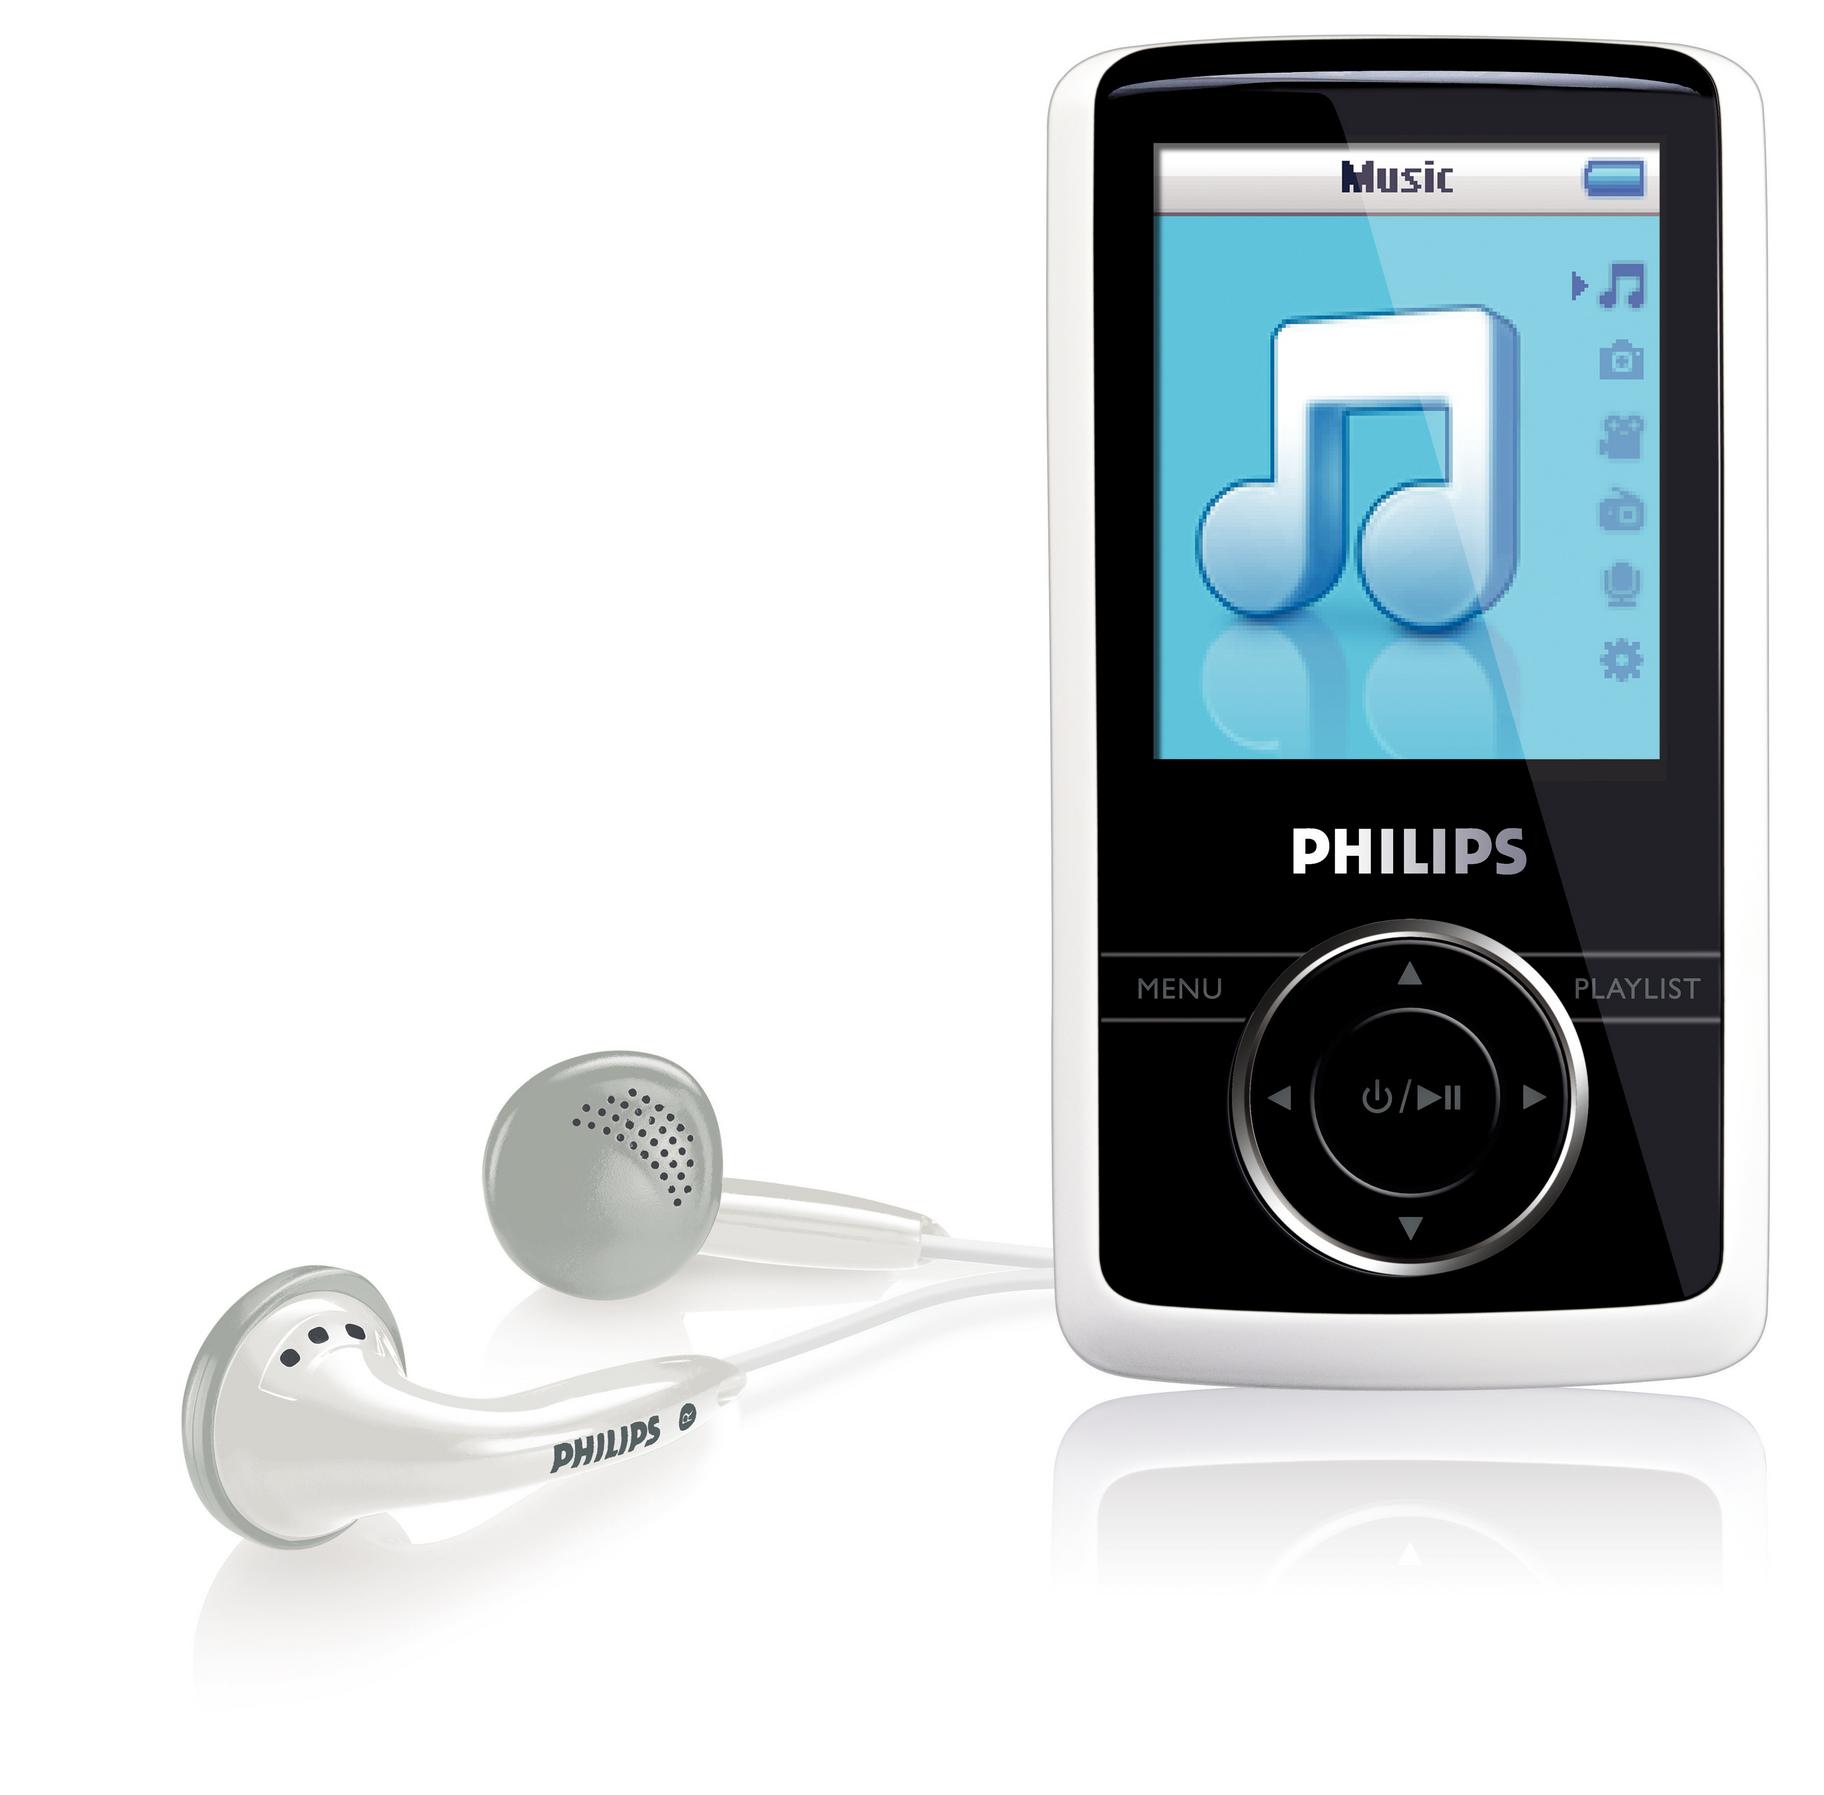 Philips gogear audio player user manual pdf